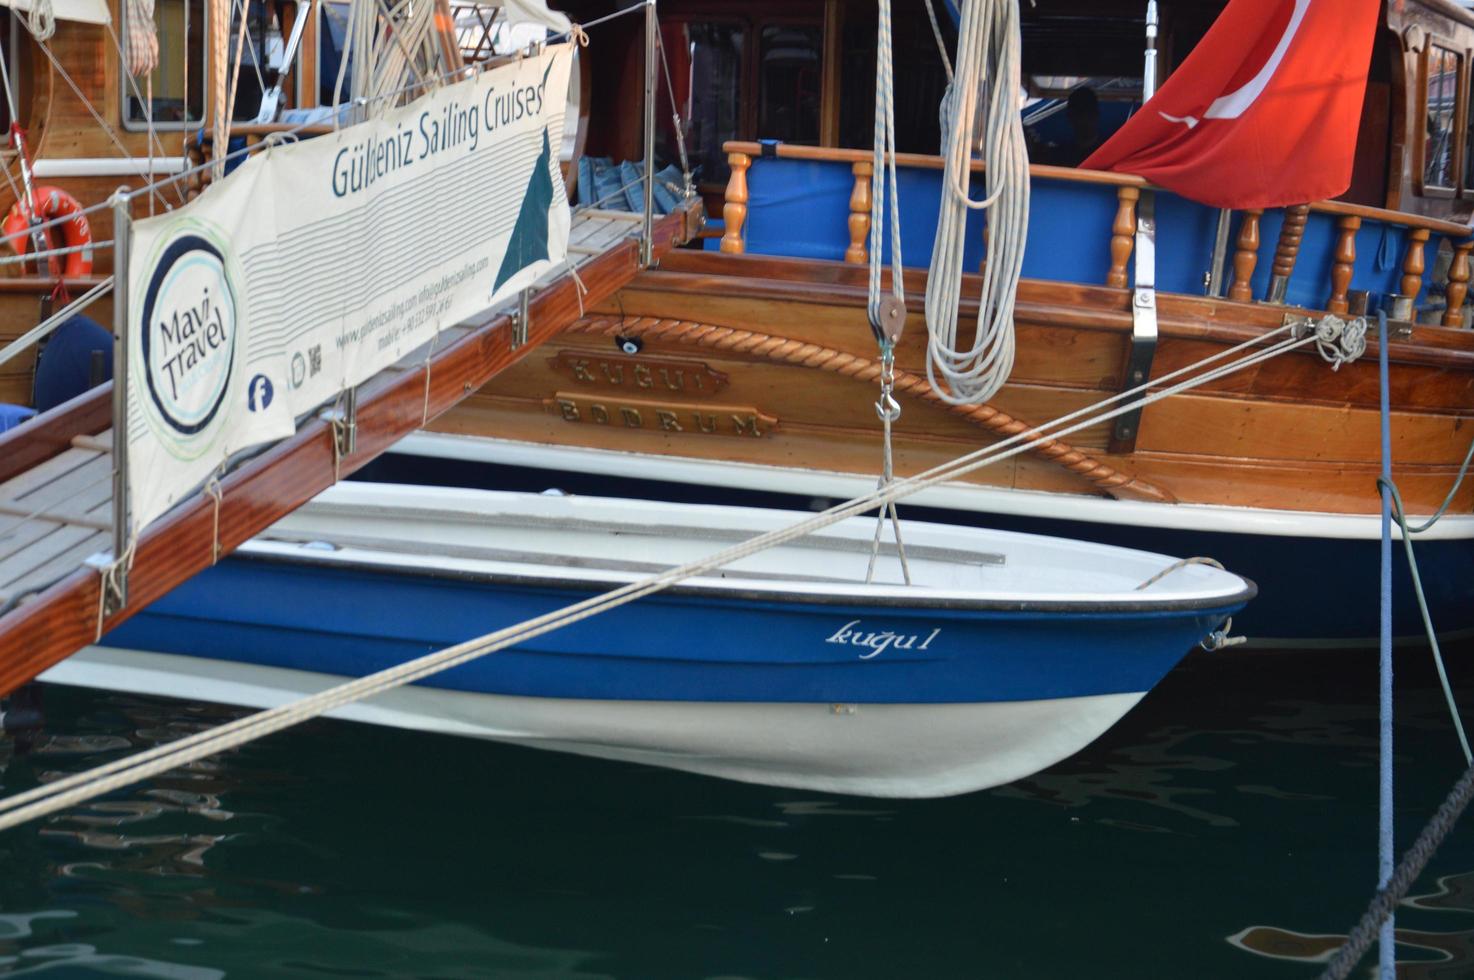 Bodrum, Turkiet, 2020 - Yachter parkerade i marinan foto